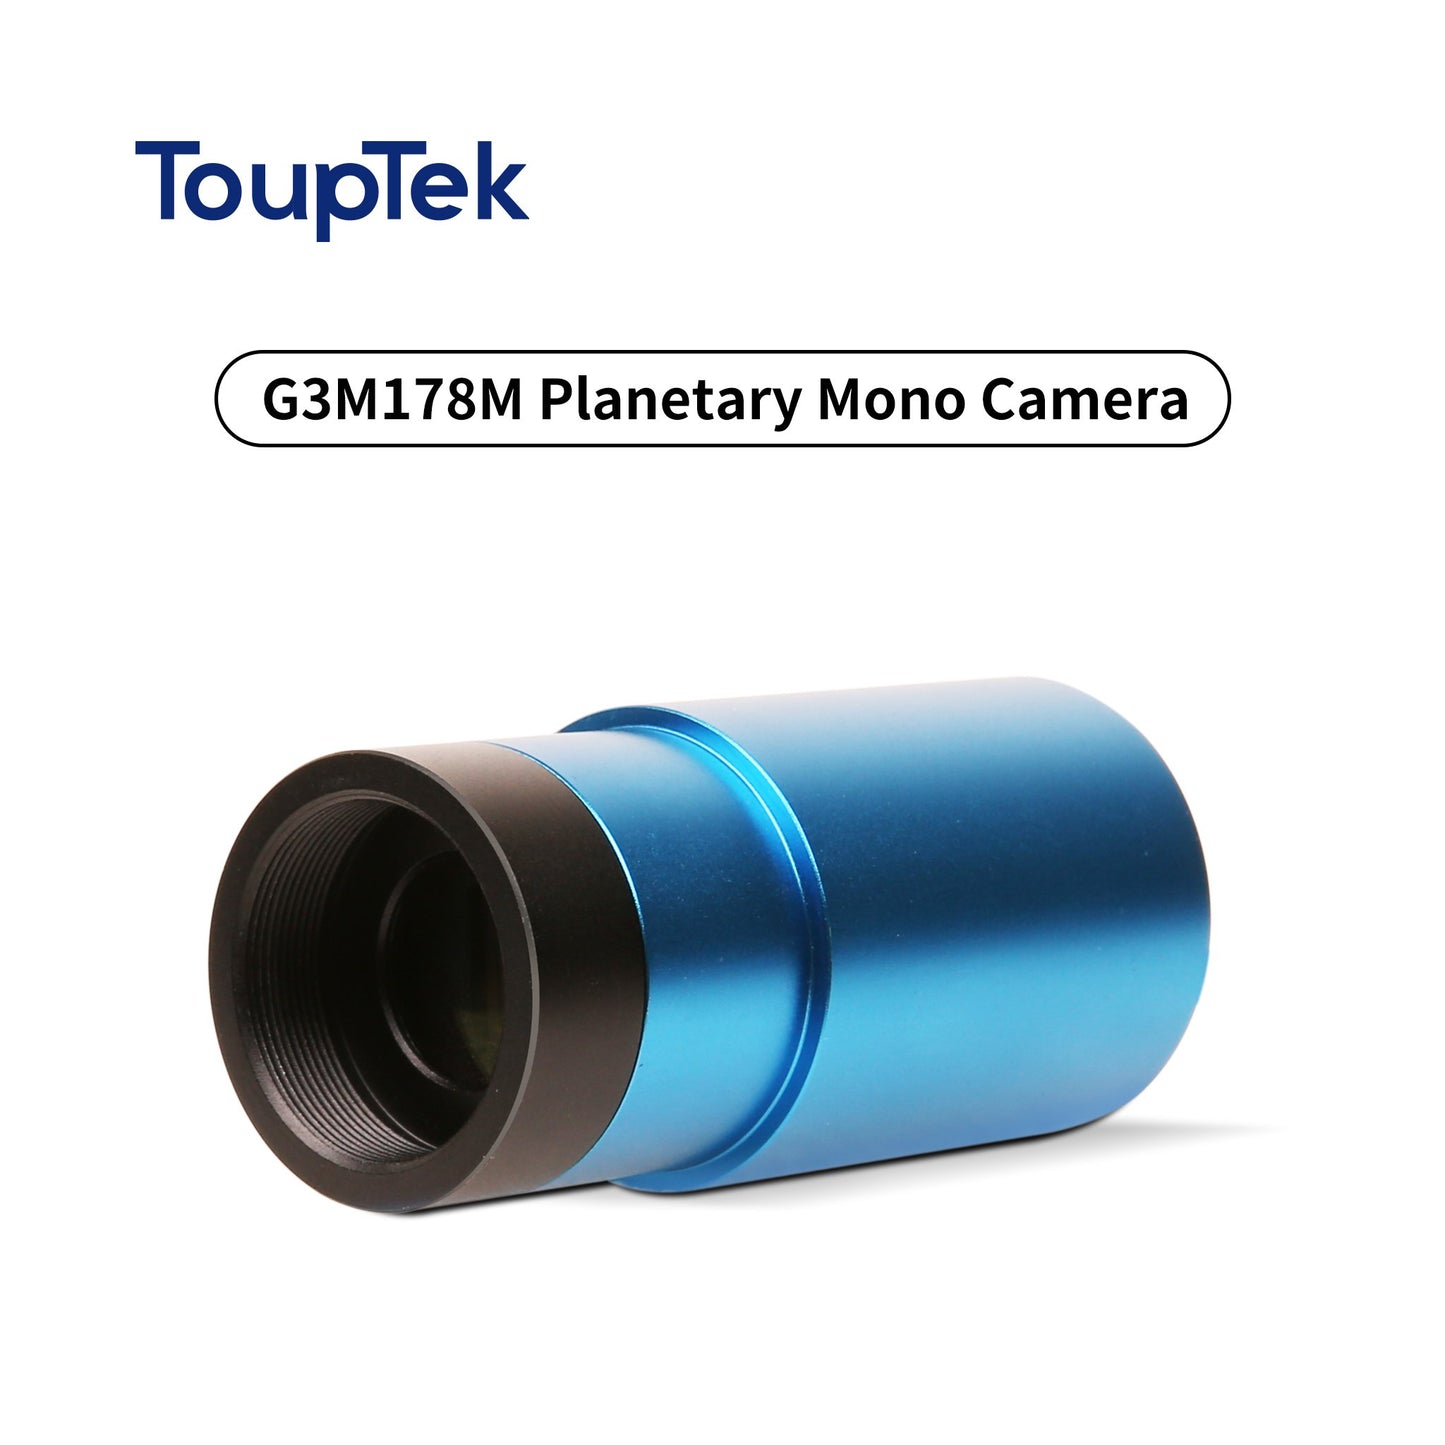 G3M178M Planetary Mono Camera